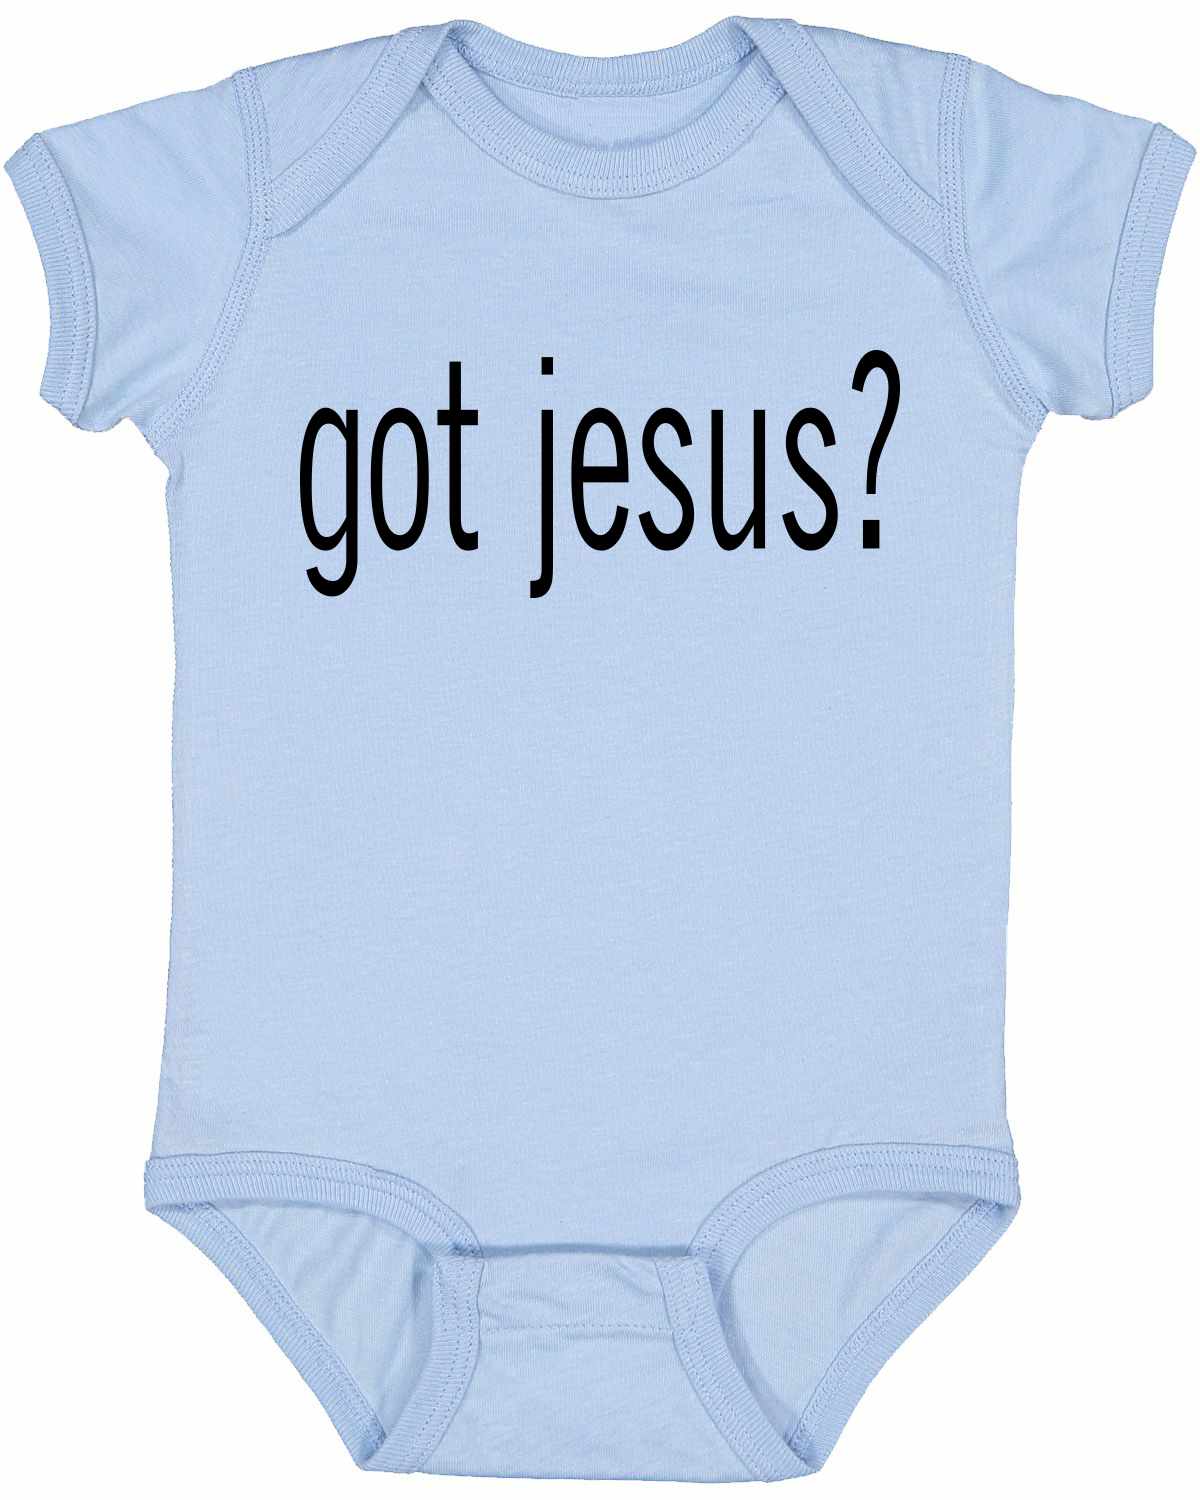 Got Jesus on Infant BodySuit